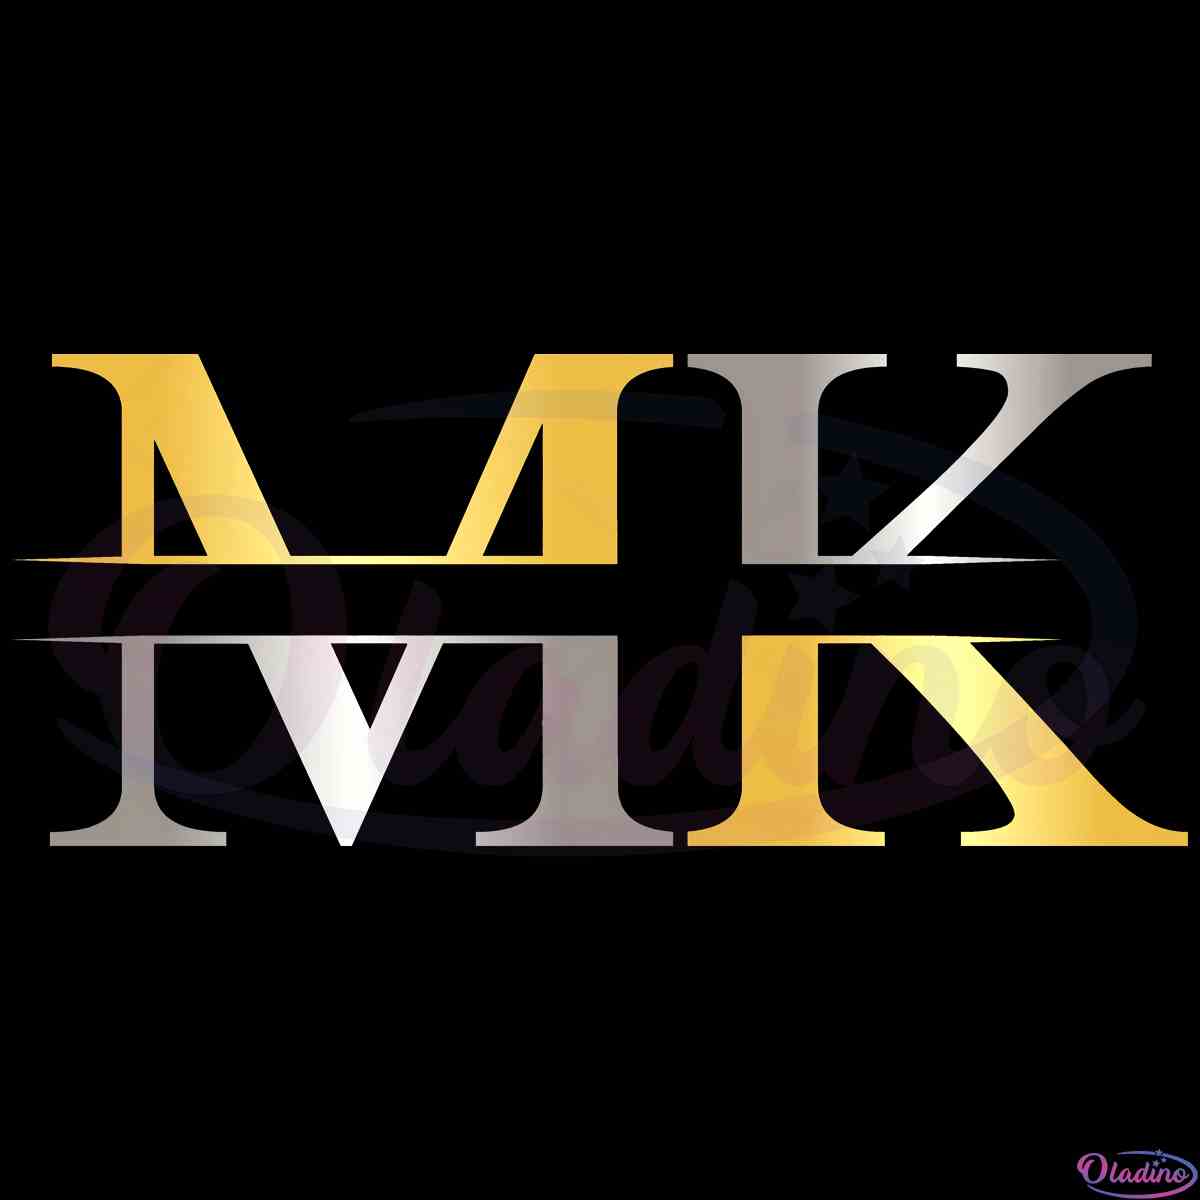 tokyo-mk-taxi-logo-svg-best-graphic-designs-cutting-files